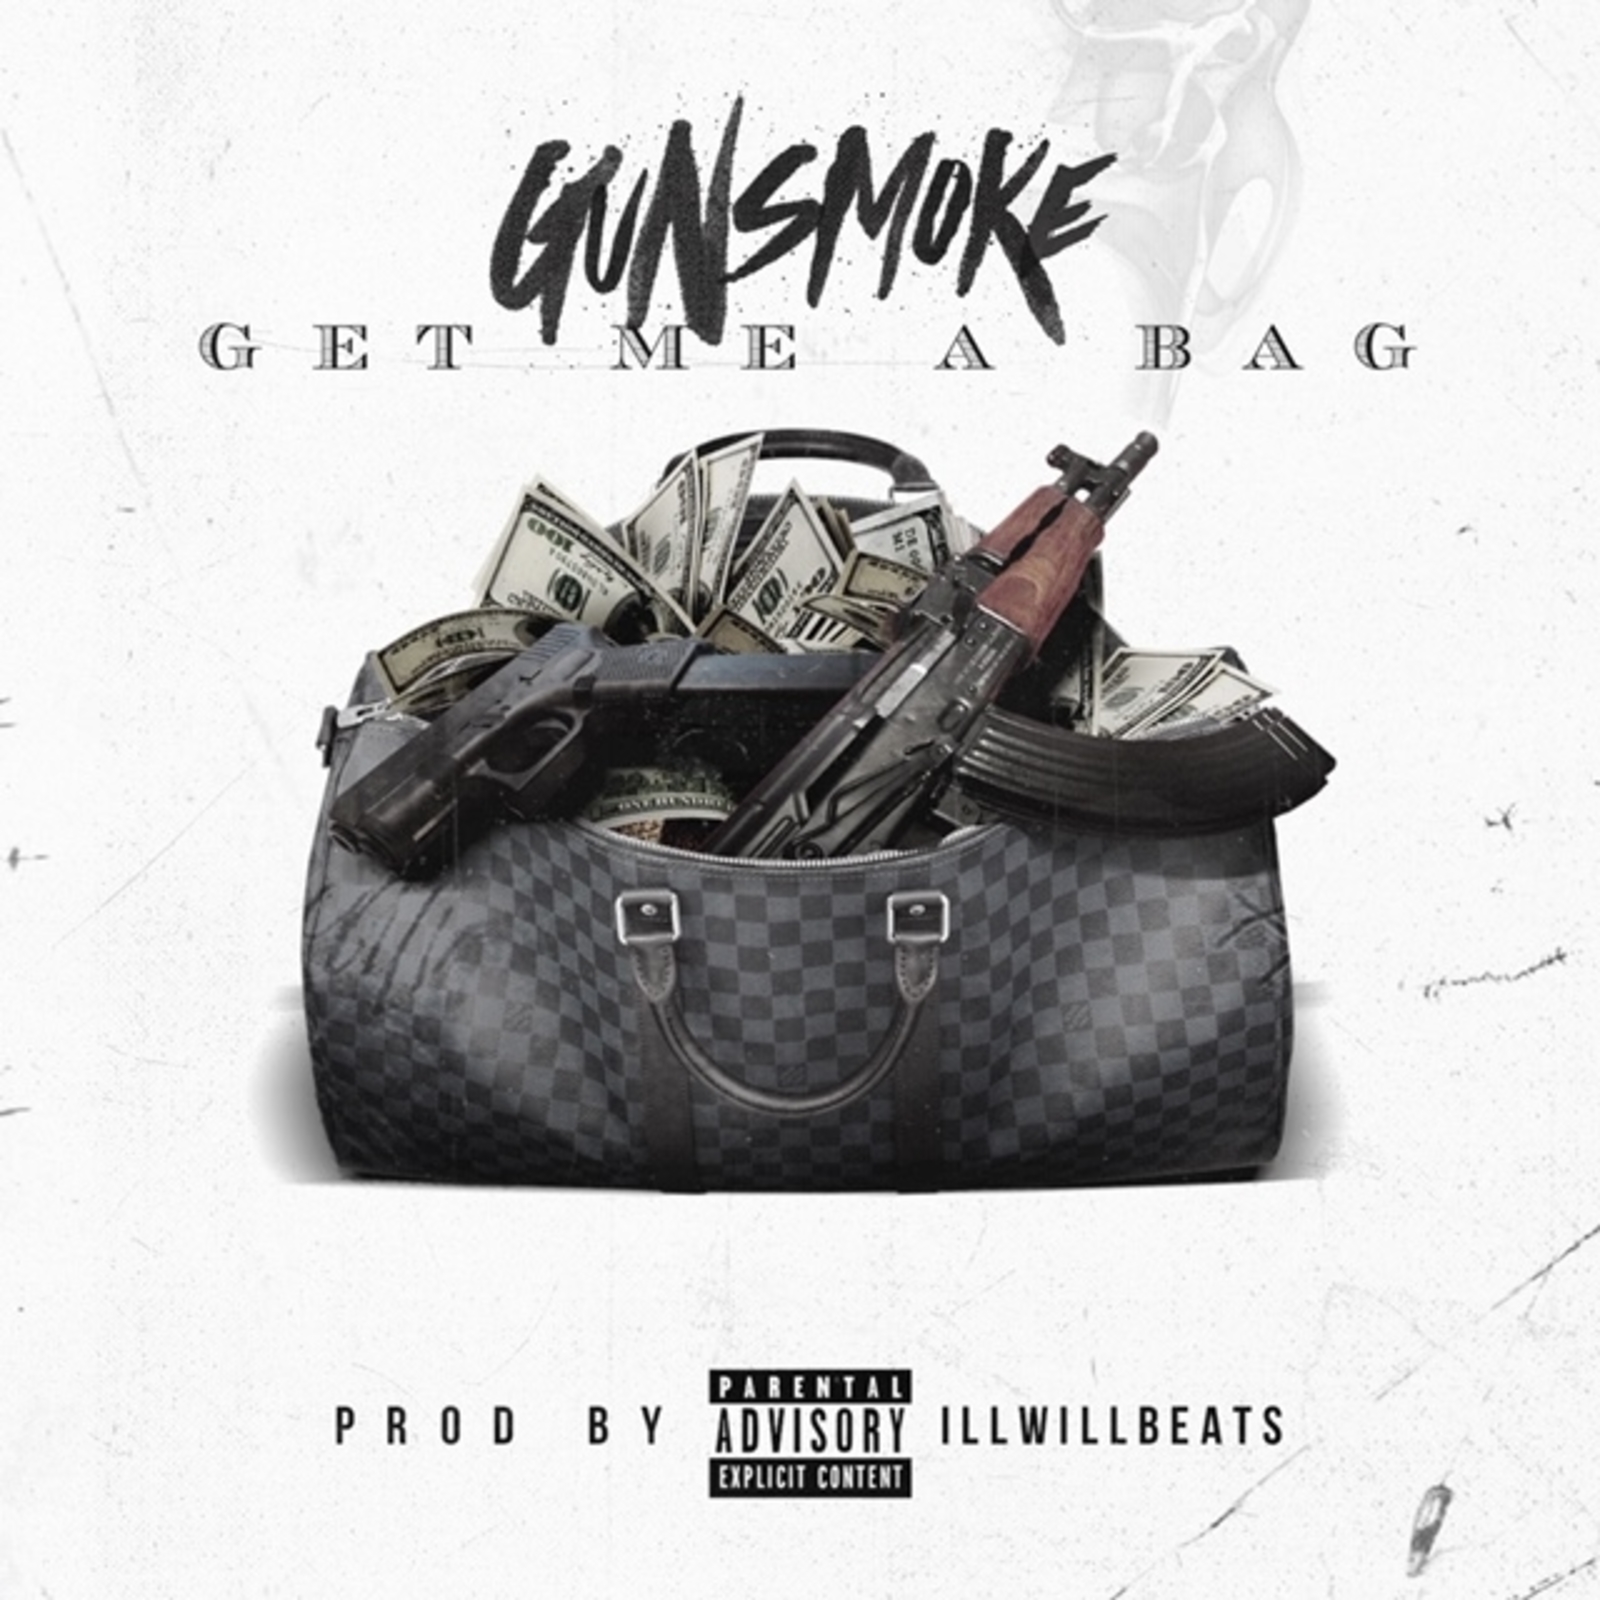 [Single] Gunsmoke ‘Get Me A Bag’ | @TheSmokeHasRise